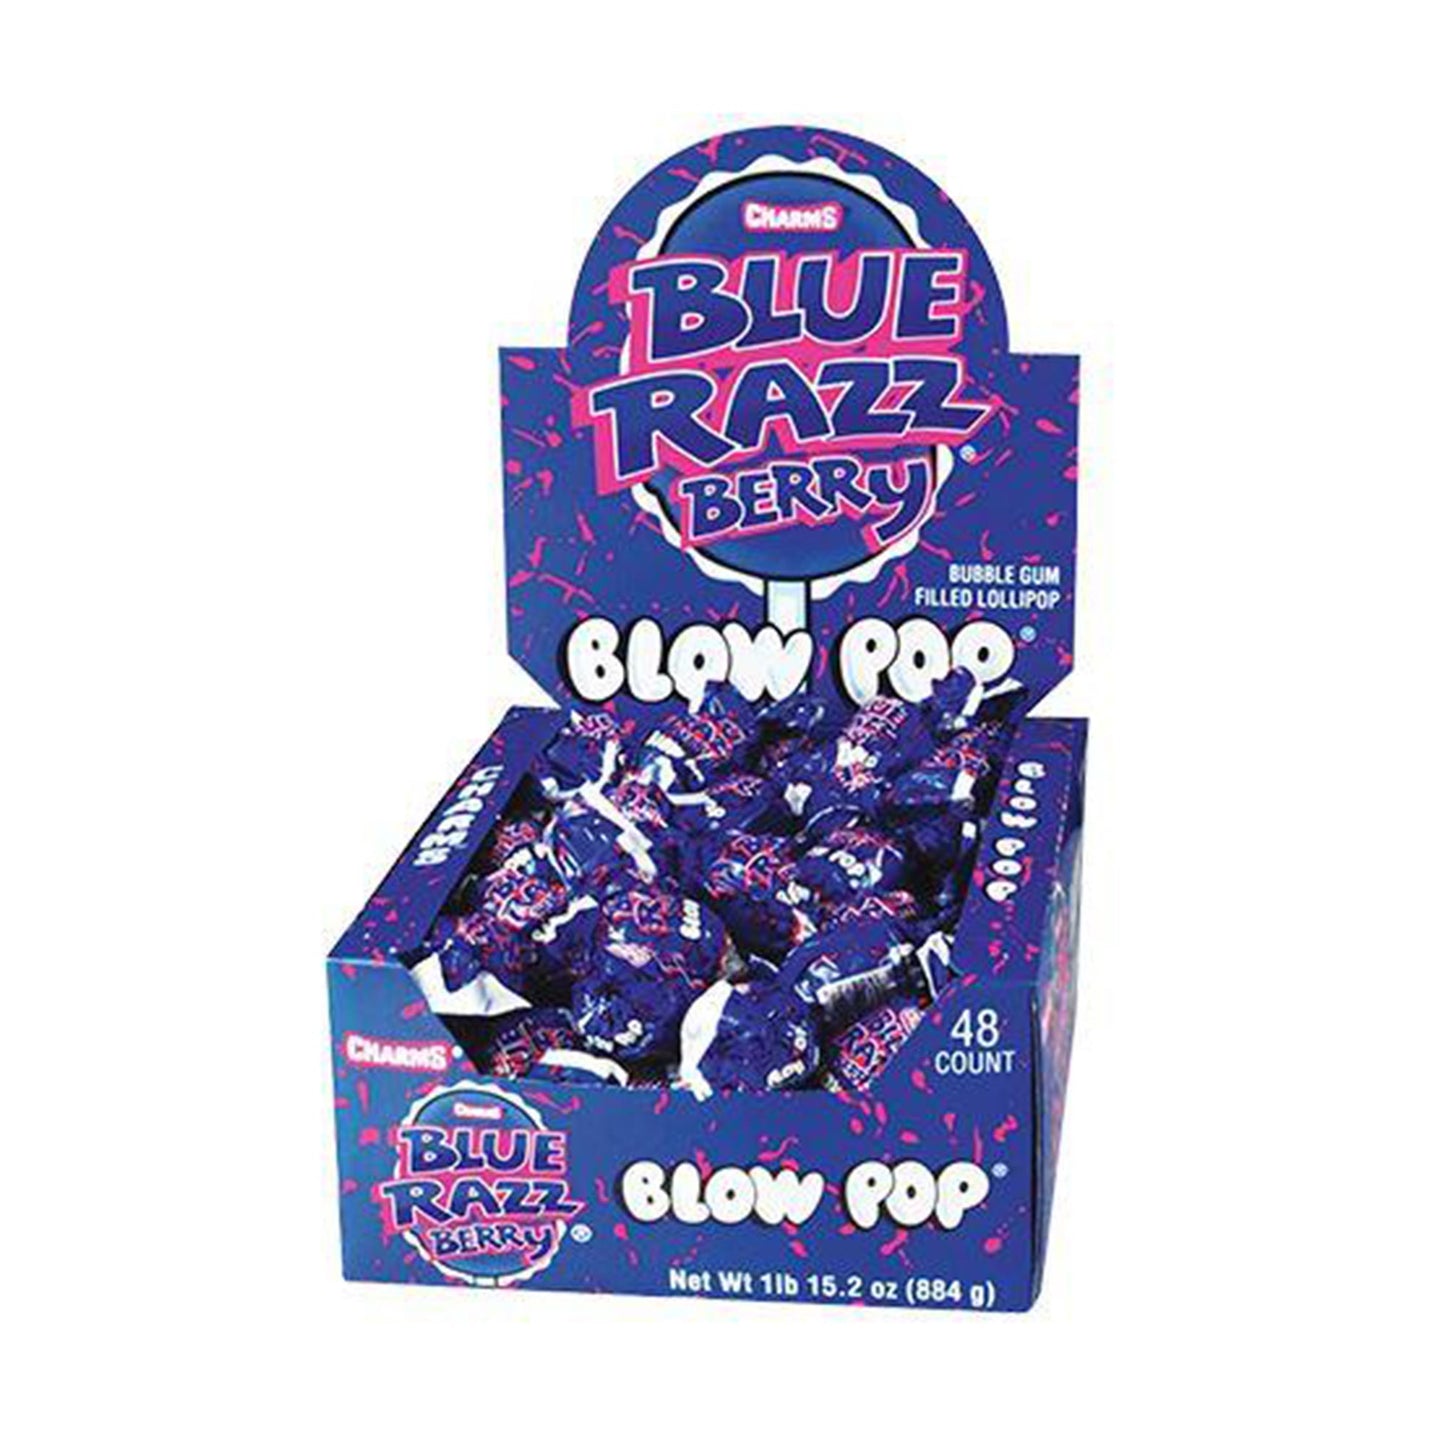 Blow Pops Blue Razz Berry Flavor (18.4g) (48ct)